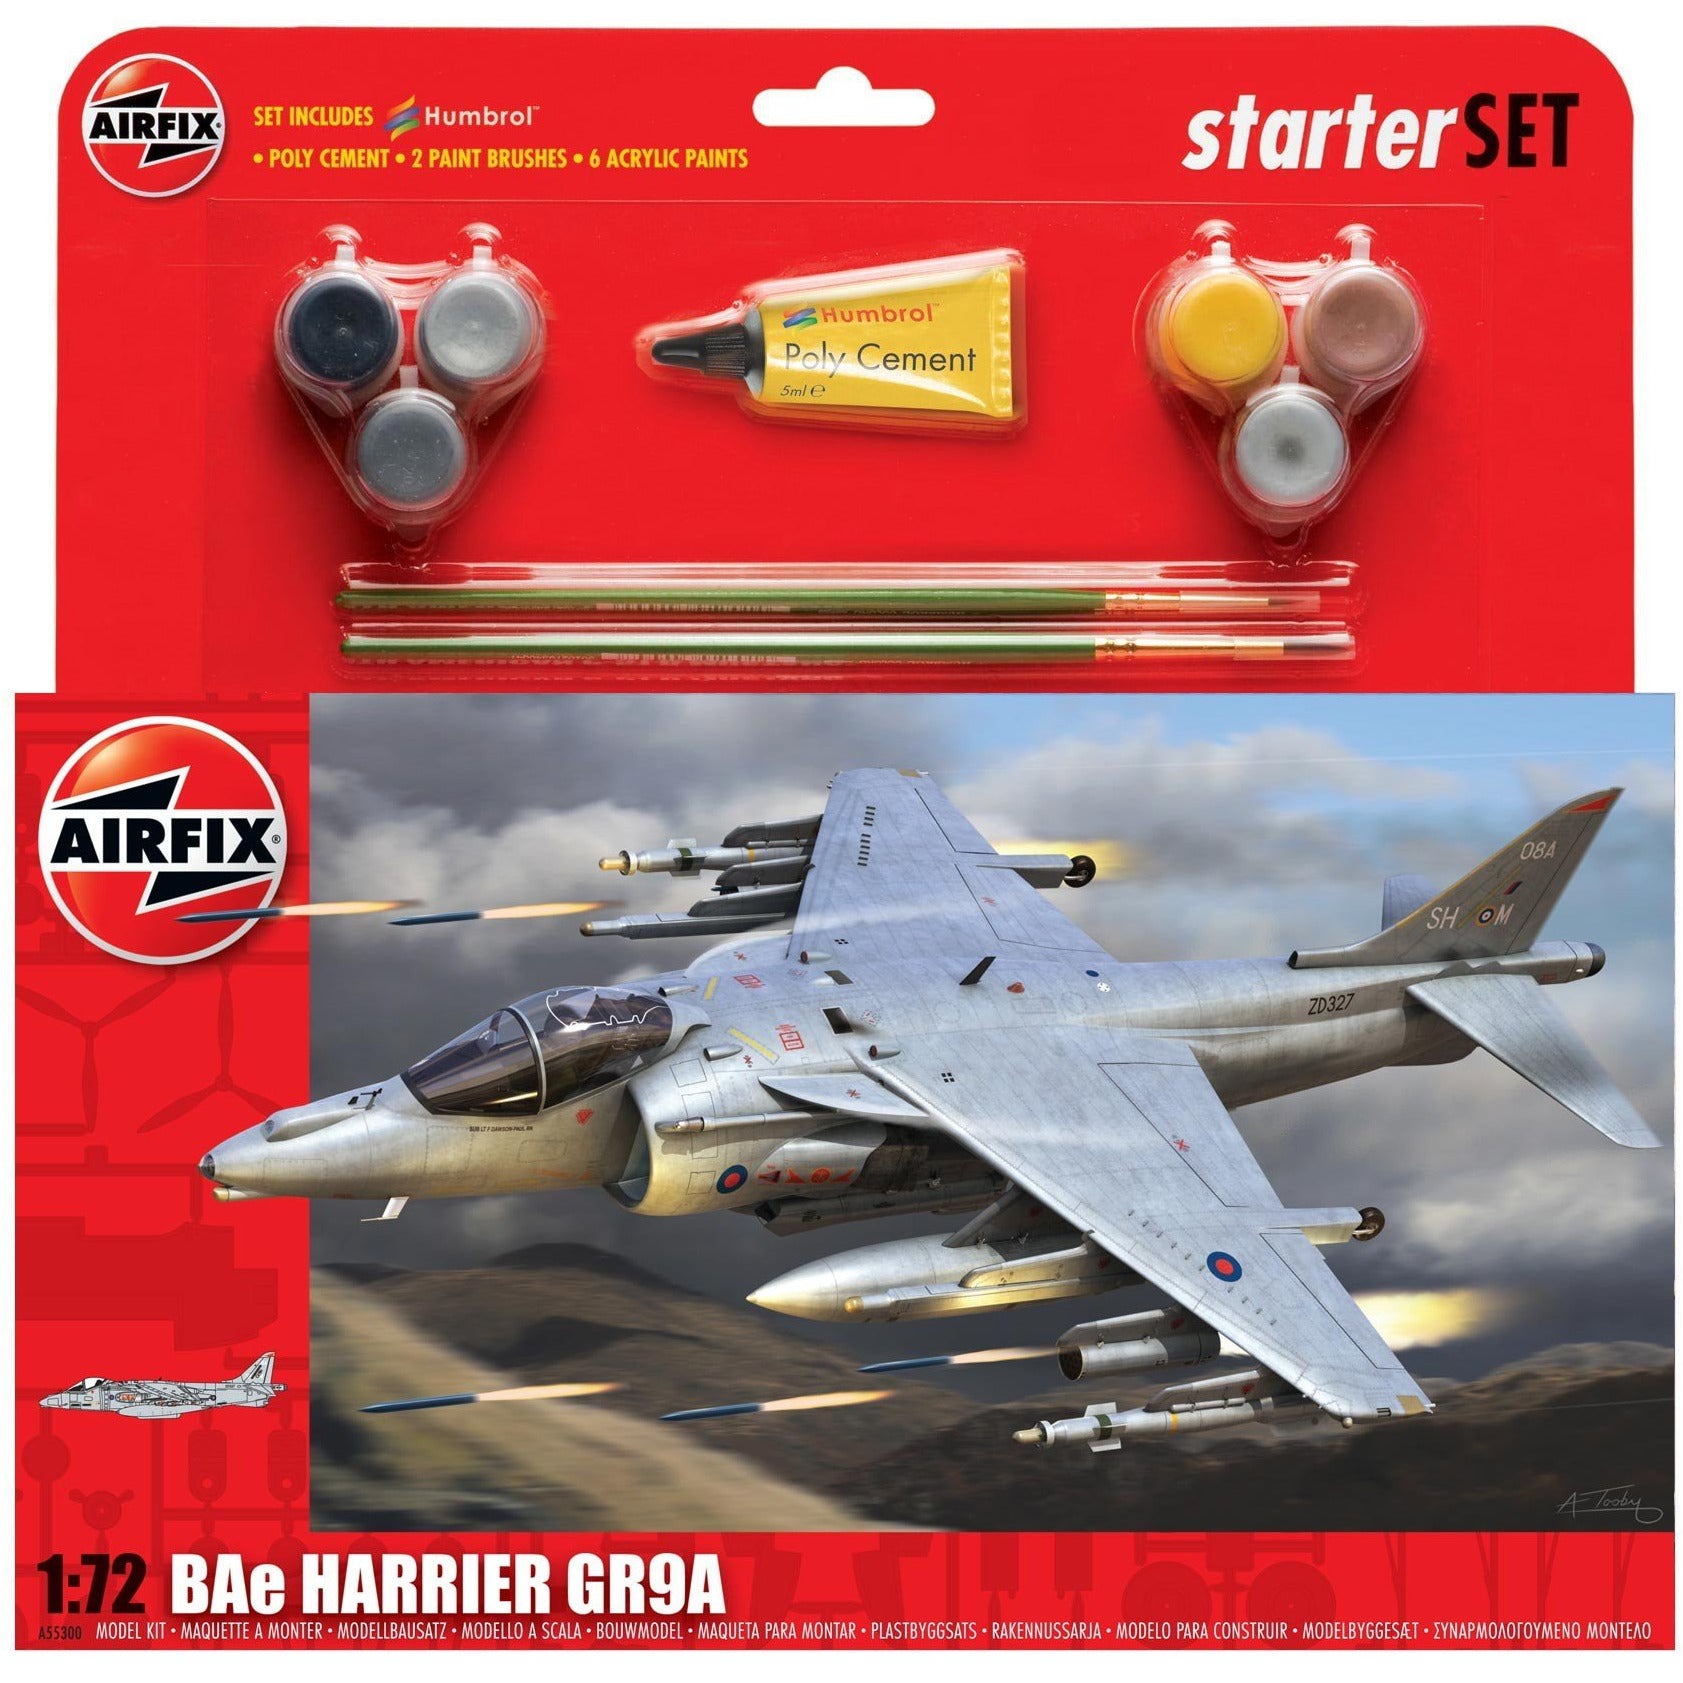 Harrier GR-9 Starter Set 1/72 by Airfix